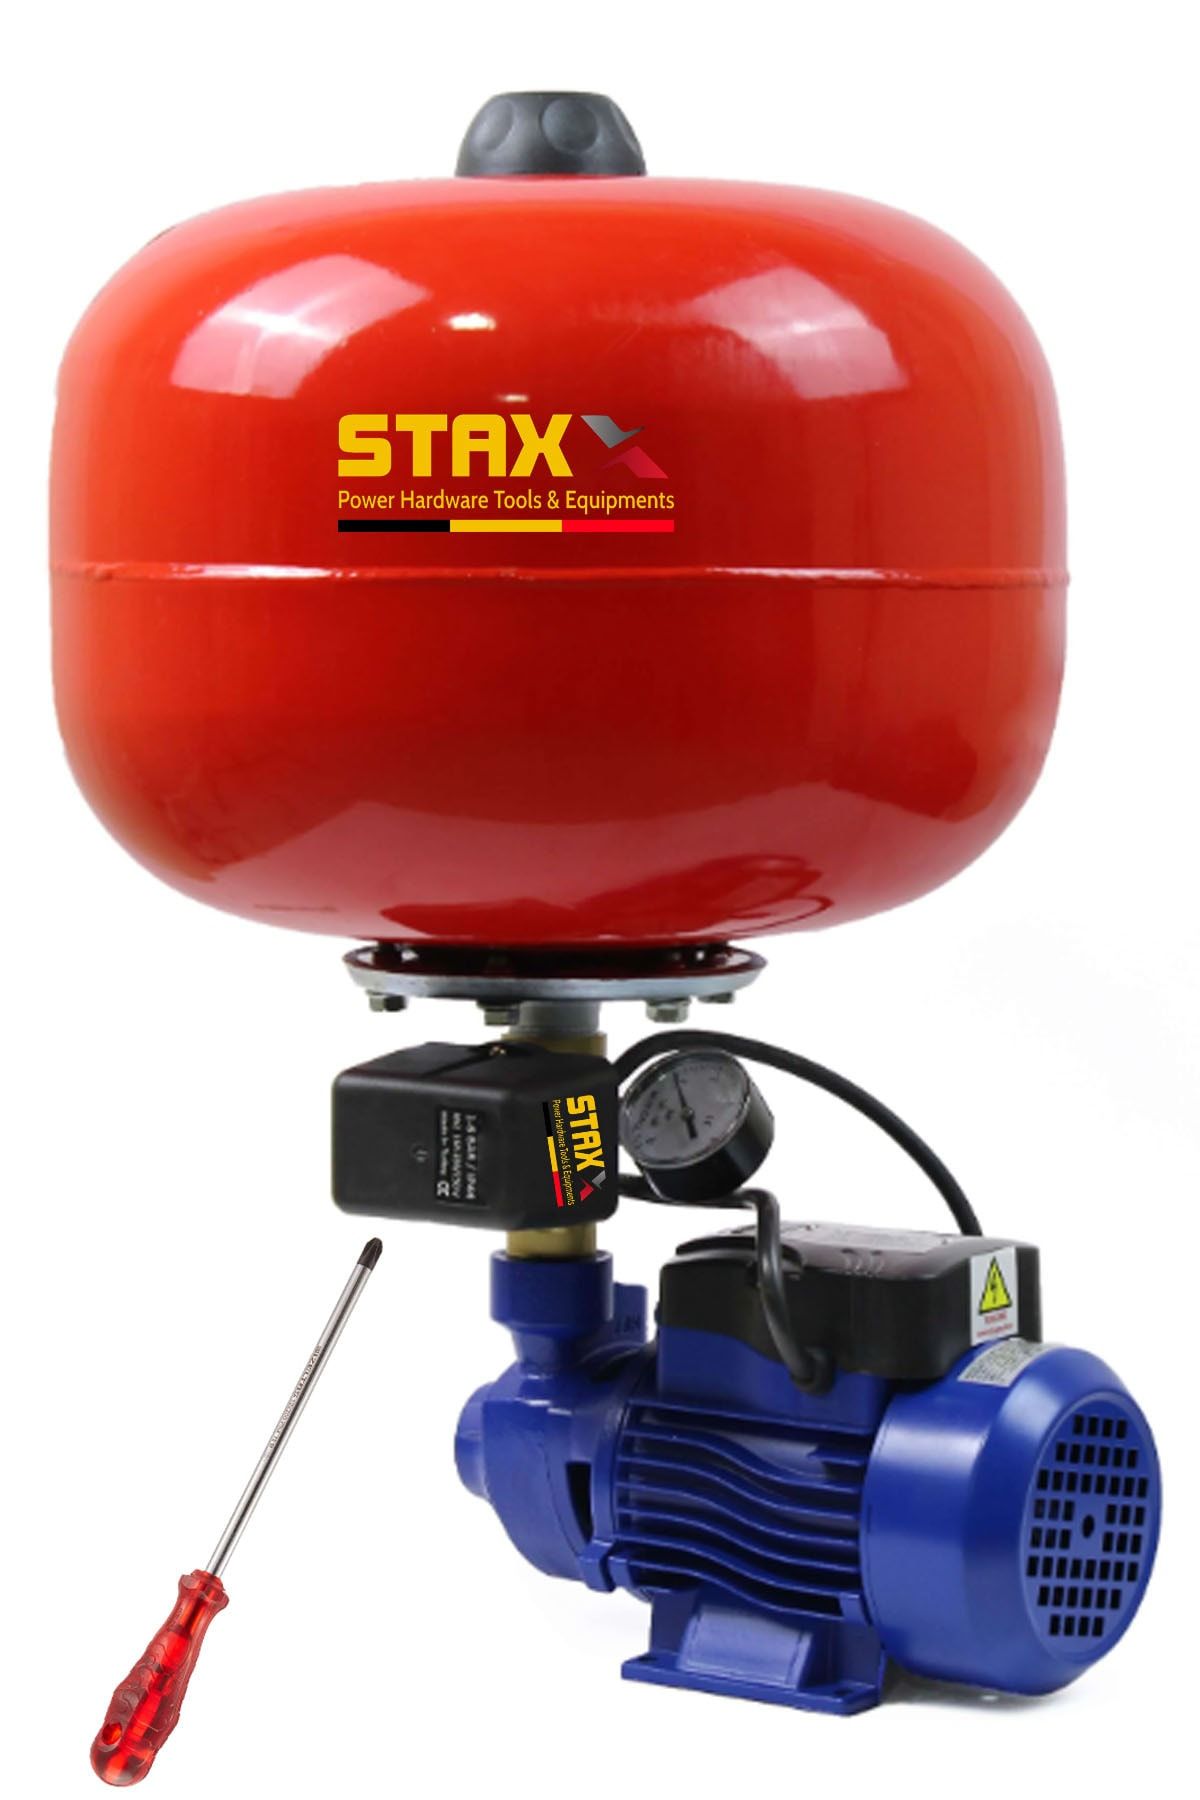 STAXX POWER Bakır Sargı Qpht60 24lt Tanklı Santrifüj Otomatik Hidrofor 2 Daire Paket Hidrofor Pompa Seti 0.50 Hp